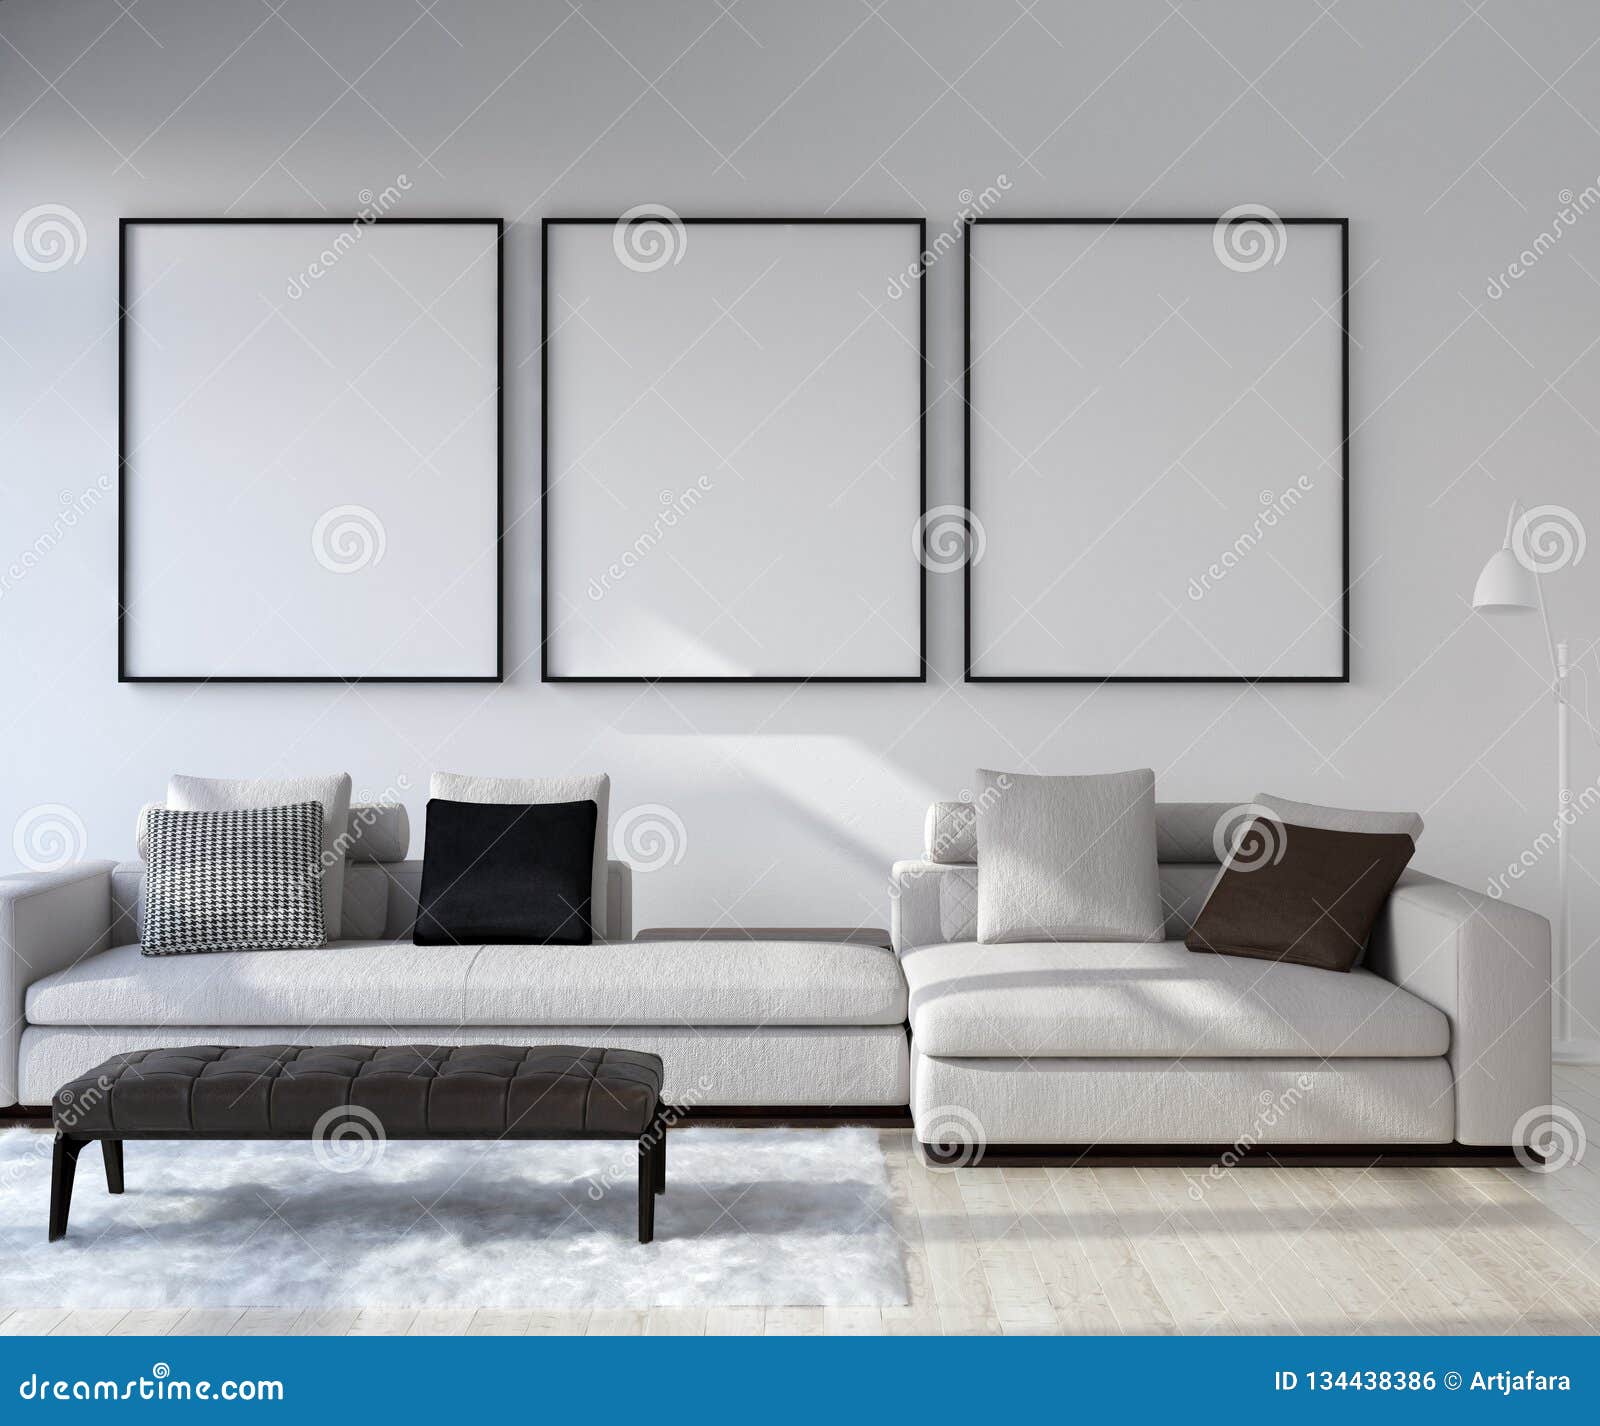 Free Photo | Interior home decor with photo frames